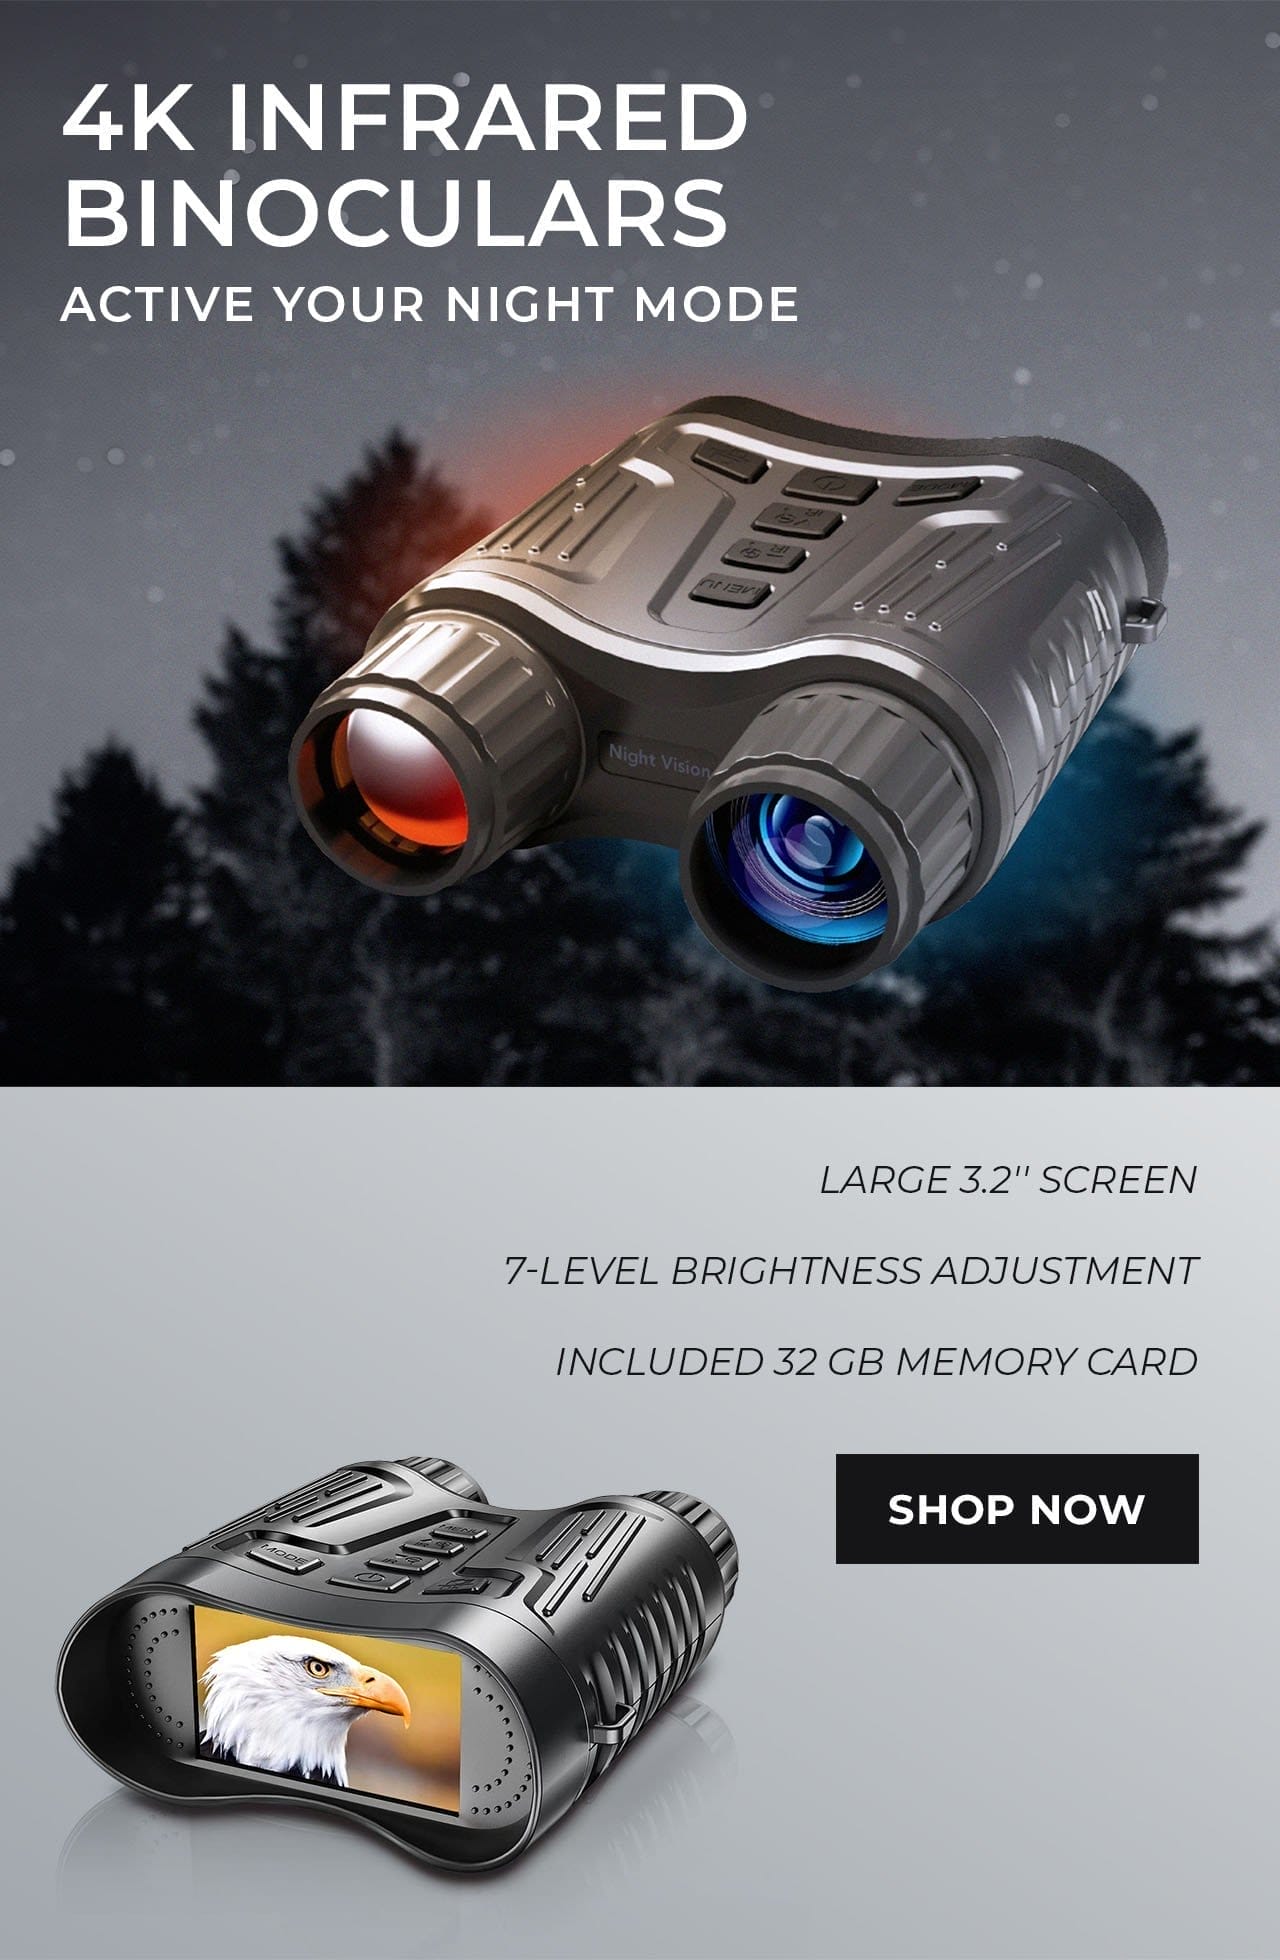 4K Infrared Binoculars | SHOP NOW